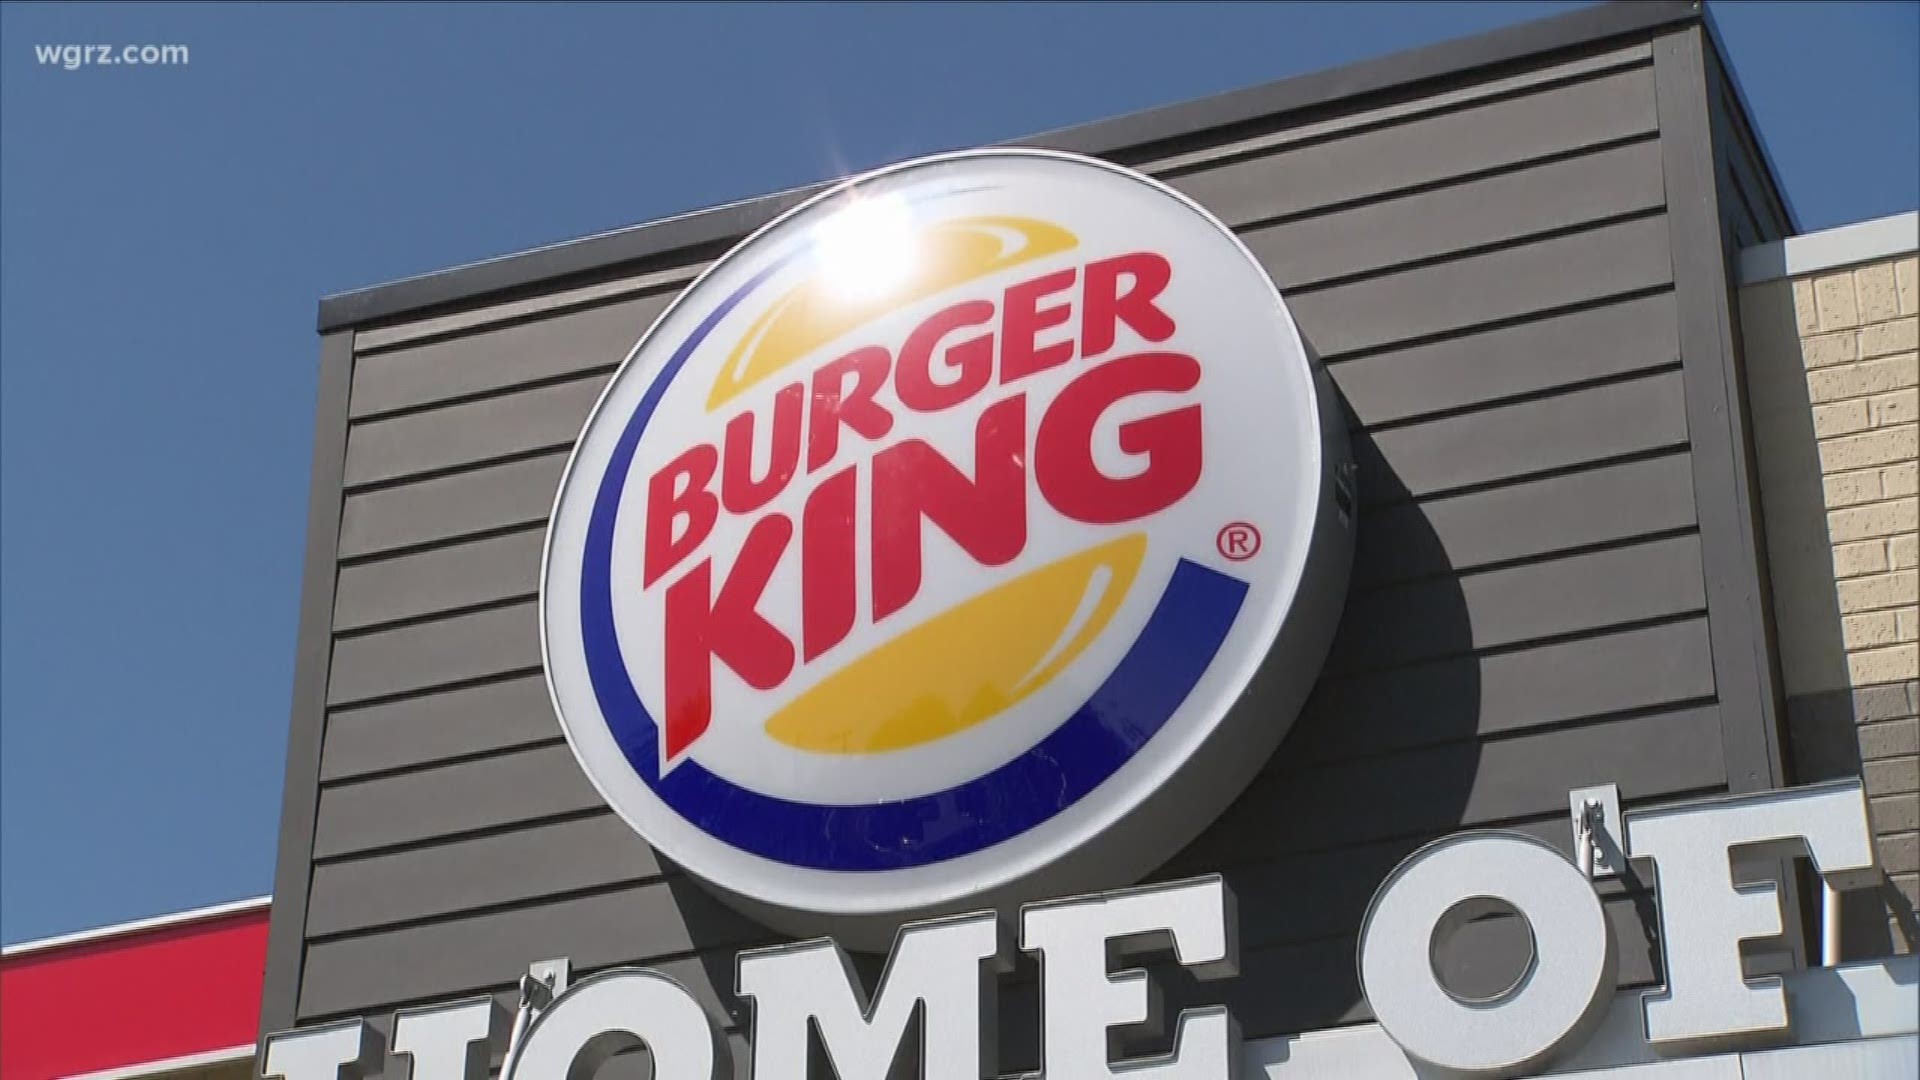 Burger King Offering "Real Meals"